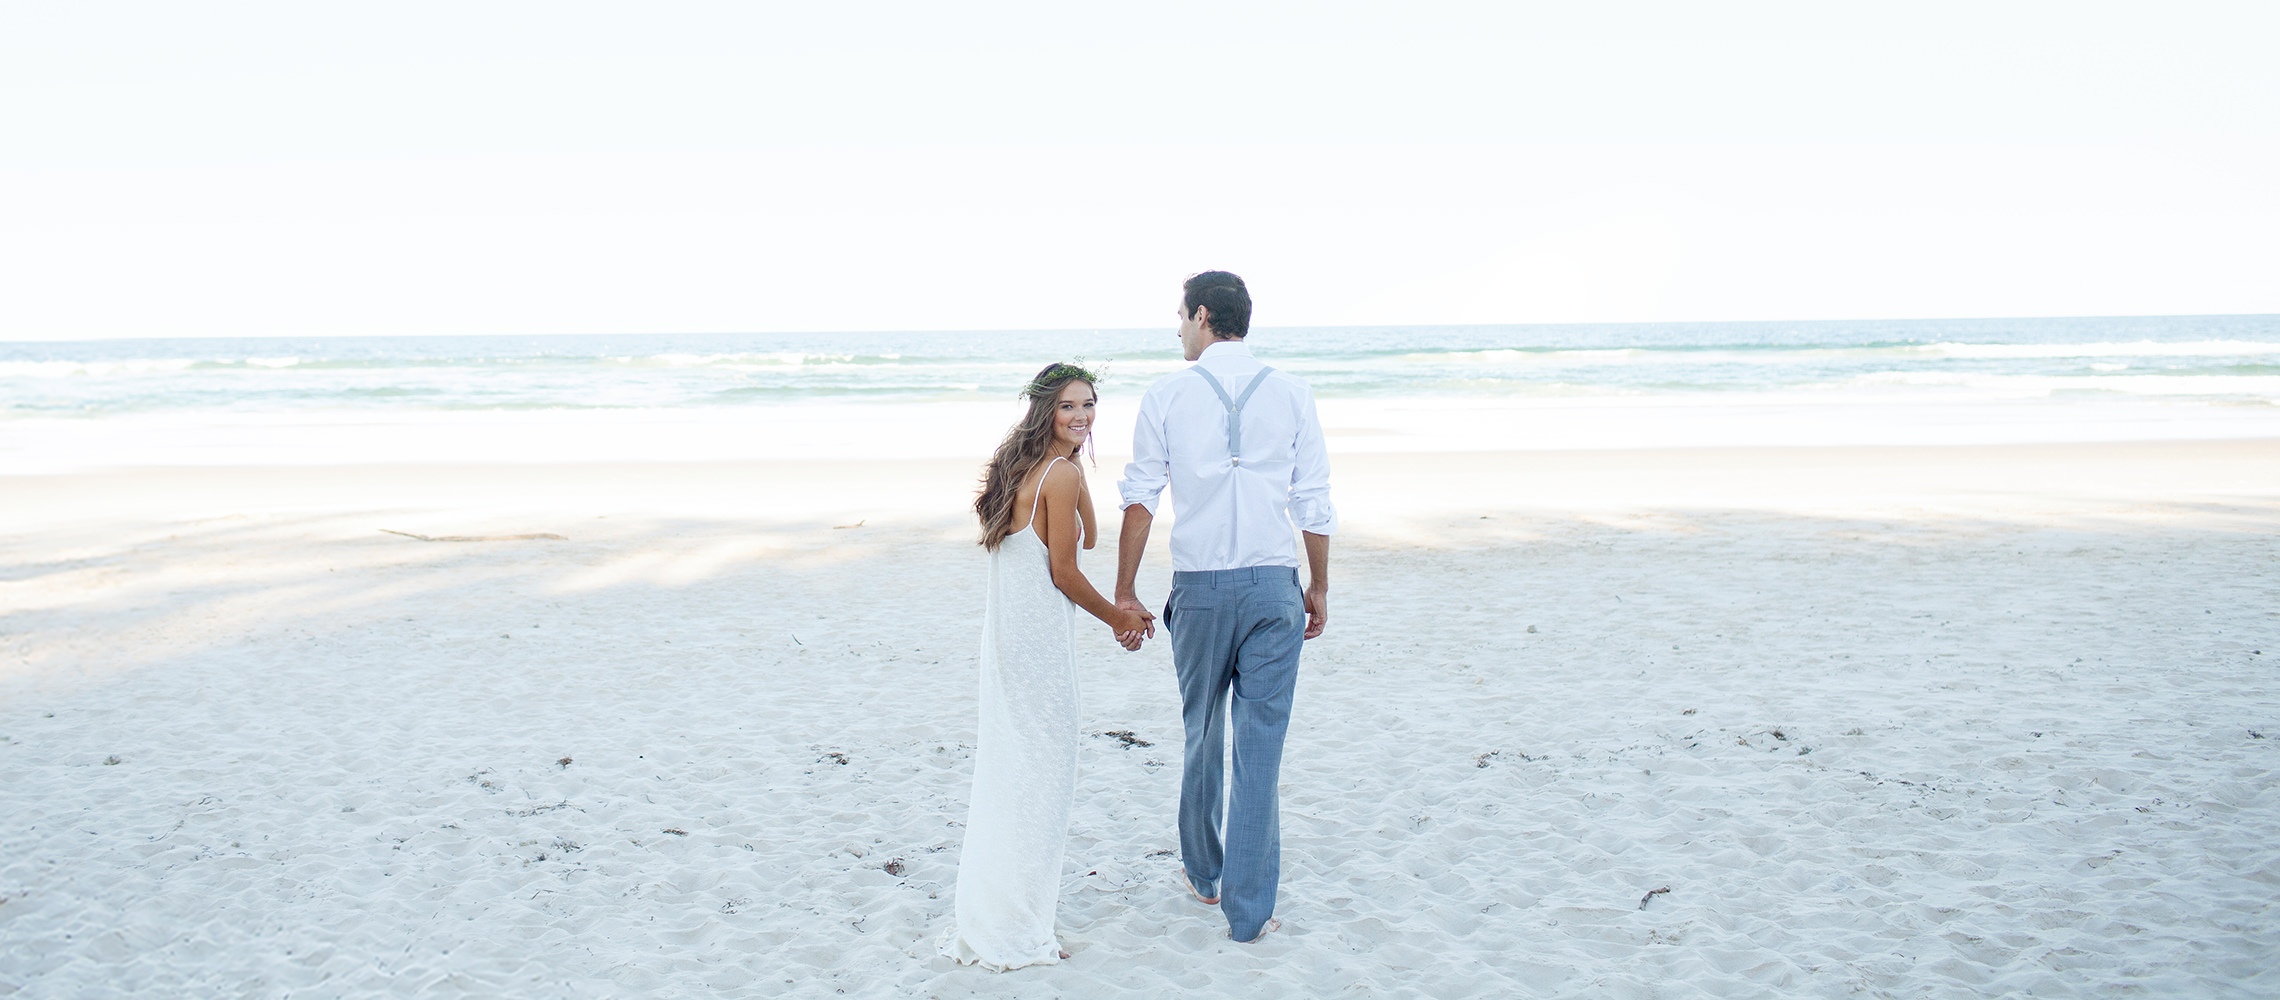 Newlyweds walking on white sand beach.